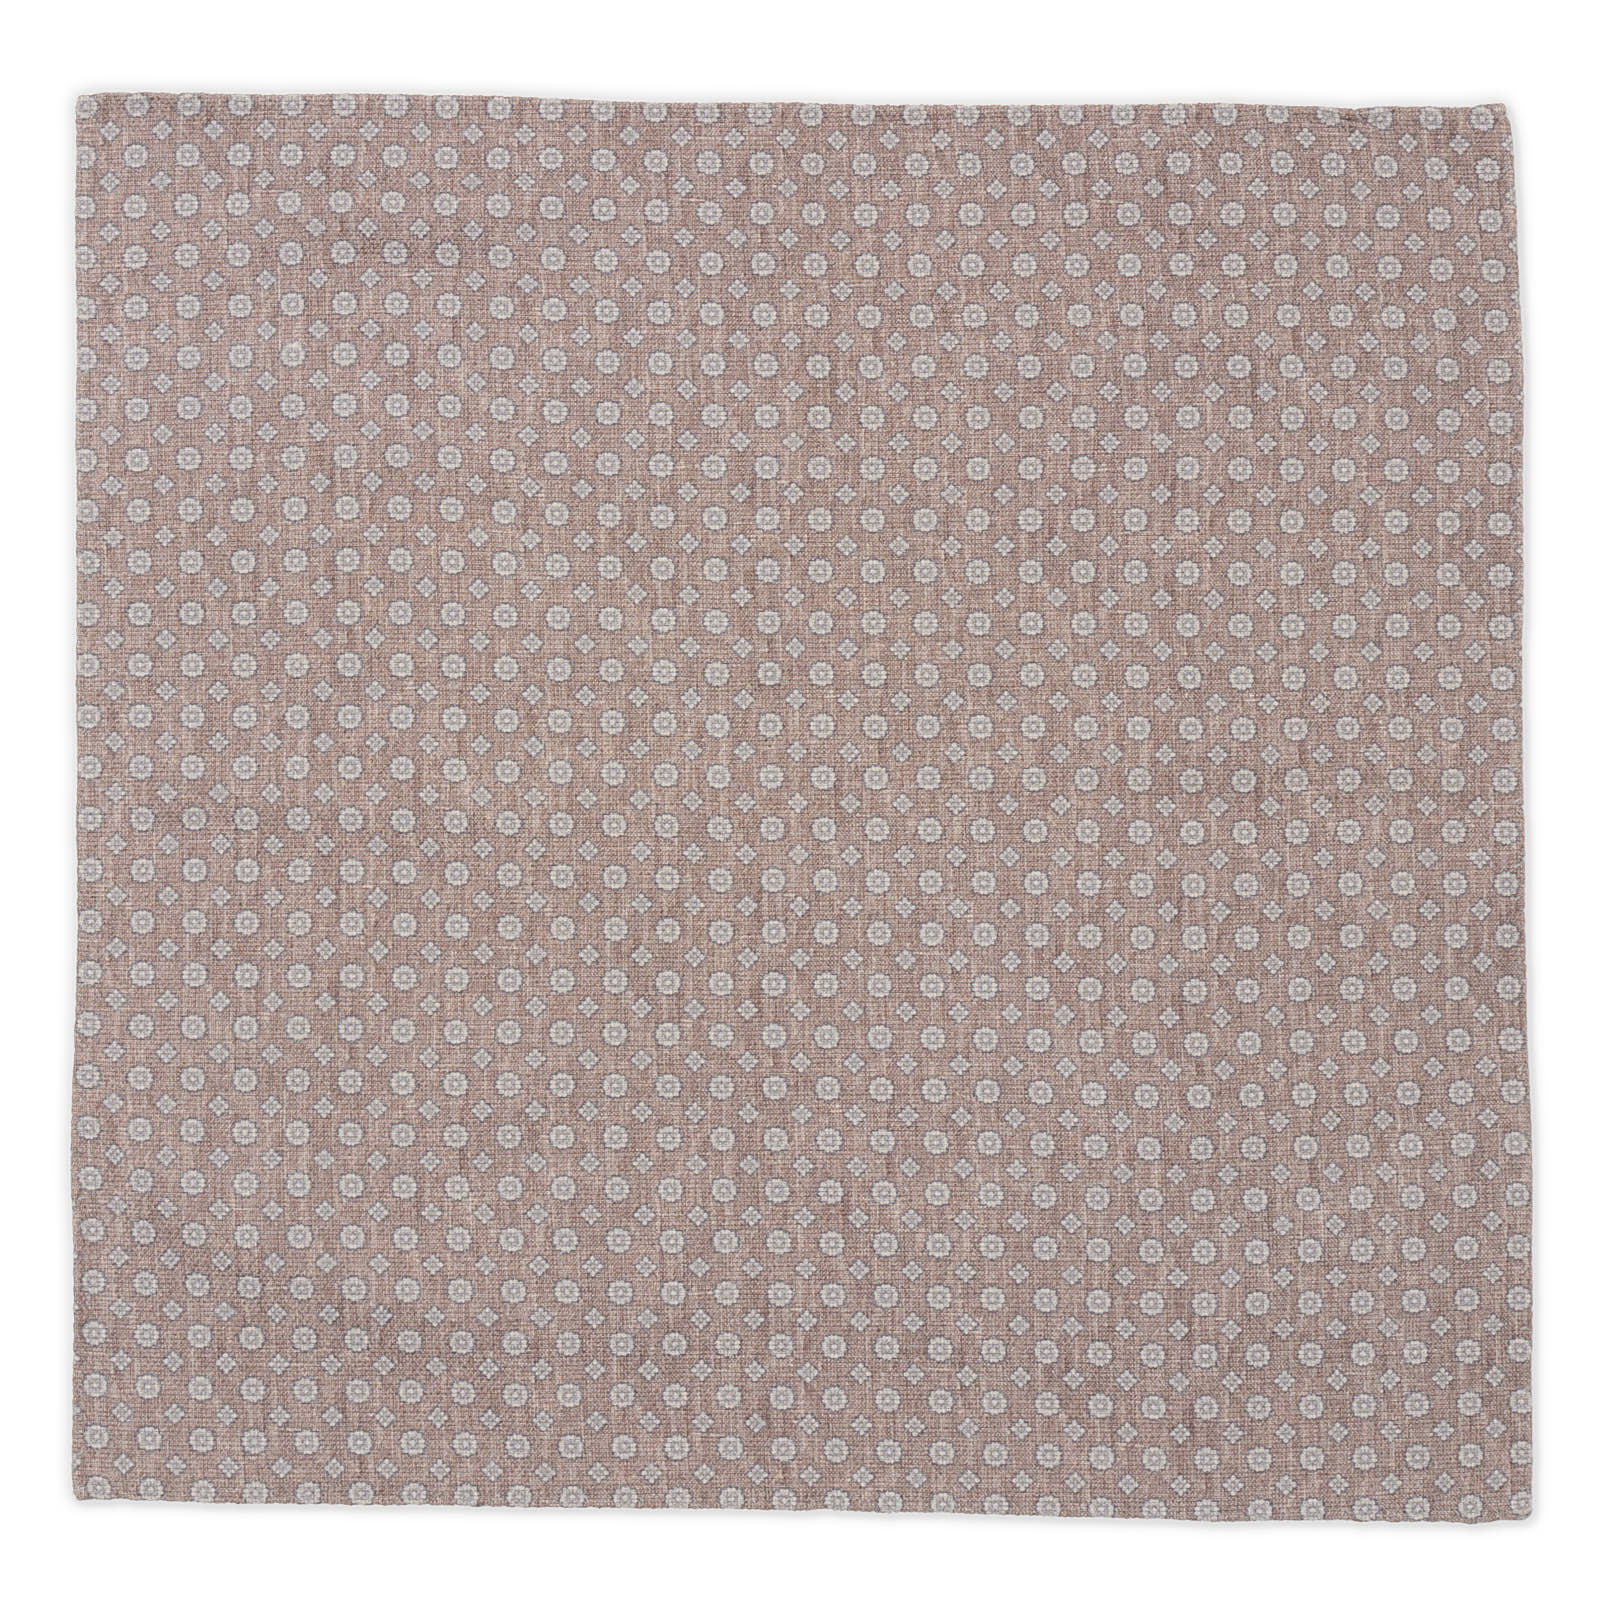 ROSI Handmade Reddish Gray Medallion Cotton-Linen Pocket Square Double